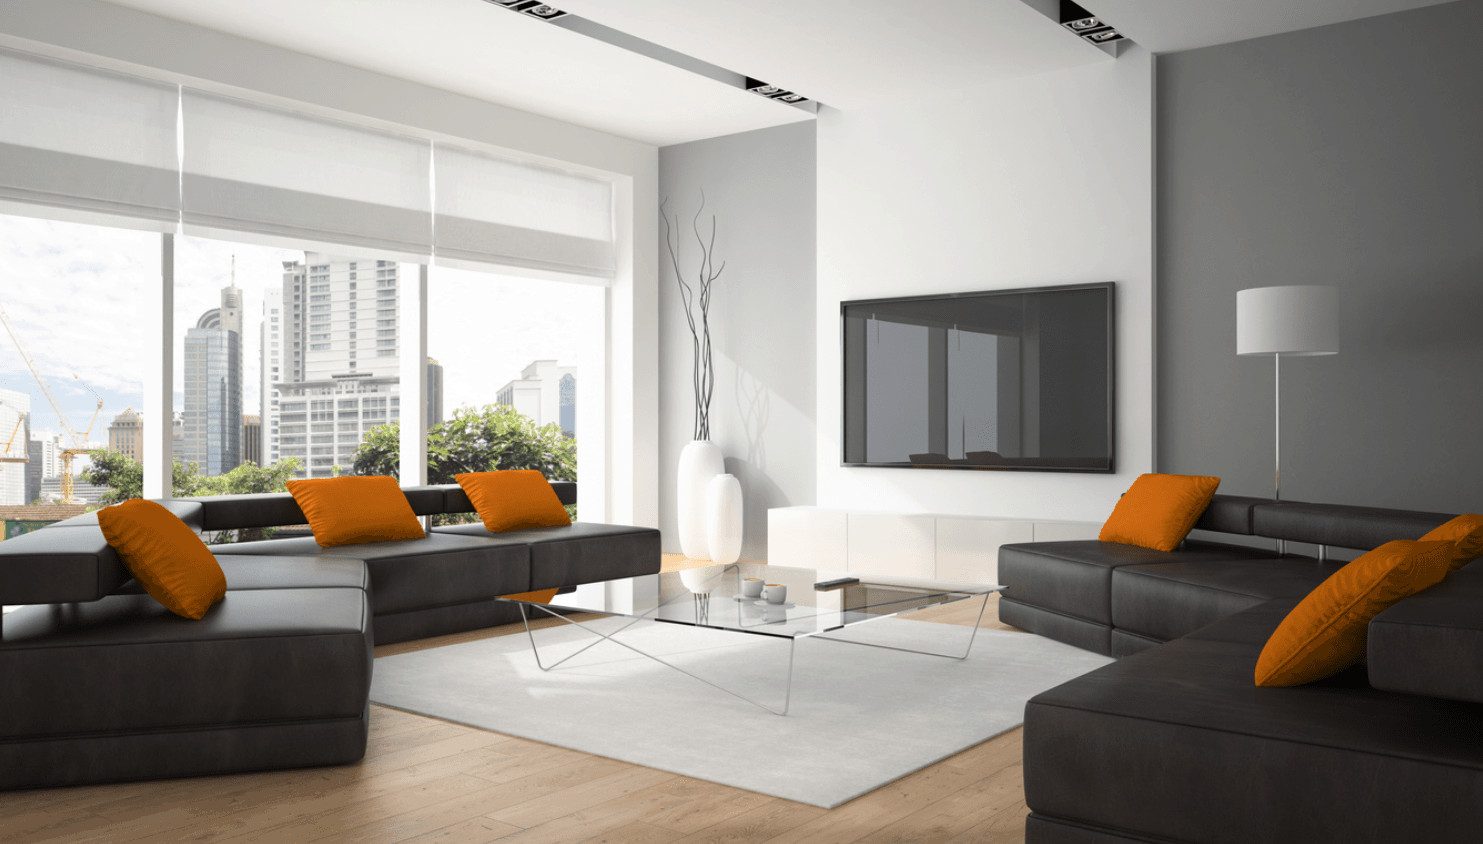 Japanese Living Room Ideas
 95 Asian Living Room Ideas for 2019